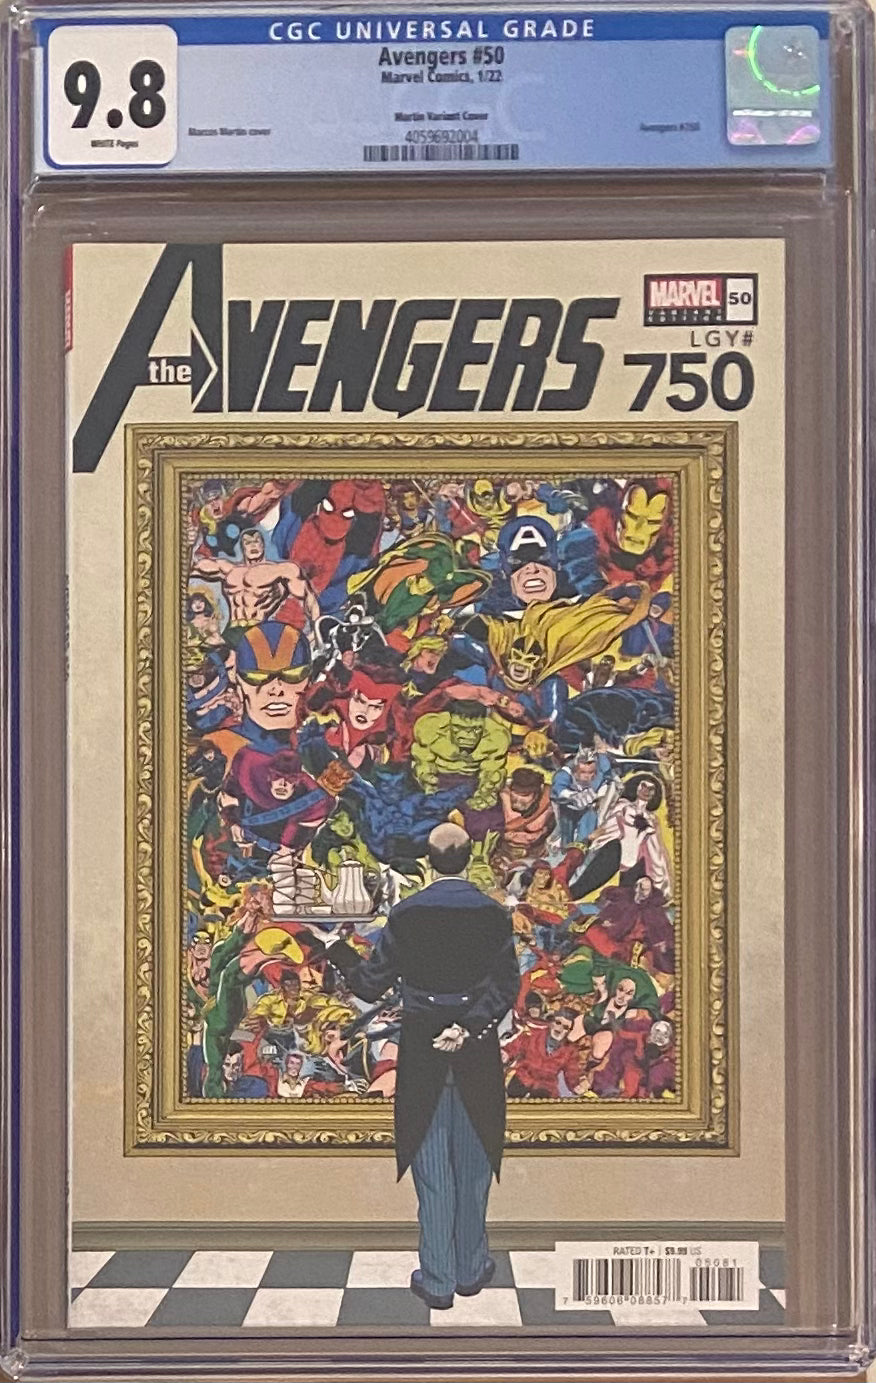 Avengers #50 (#750) Martin Variant CGC 9.8